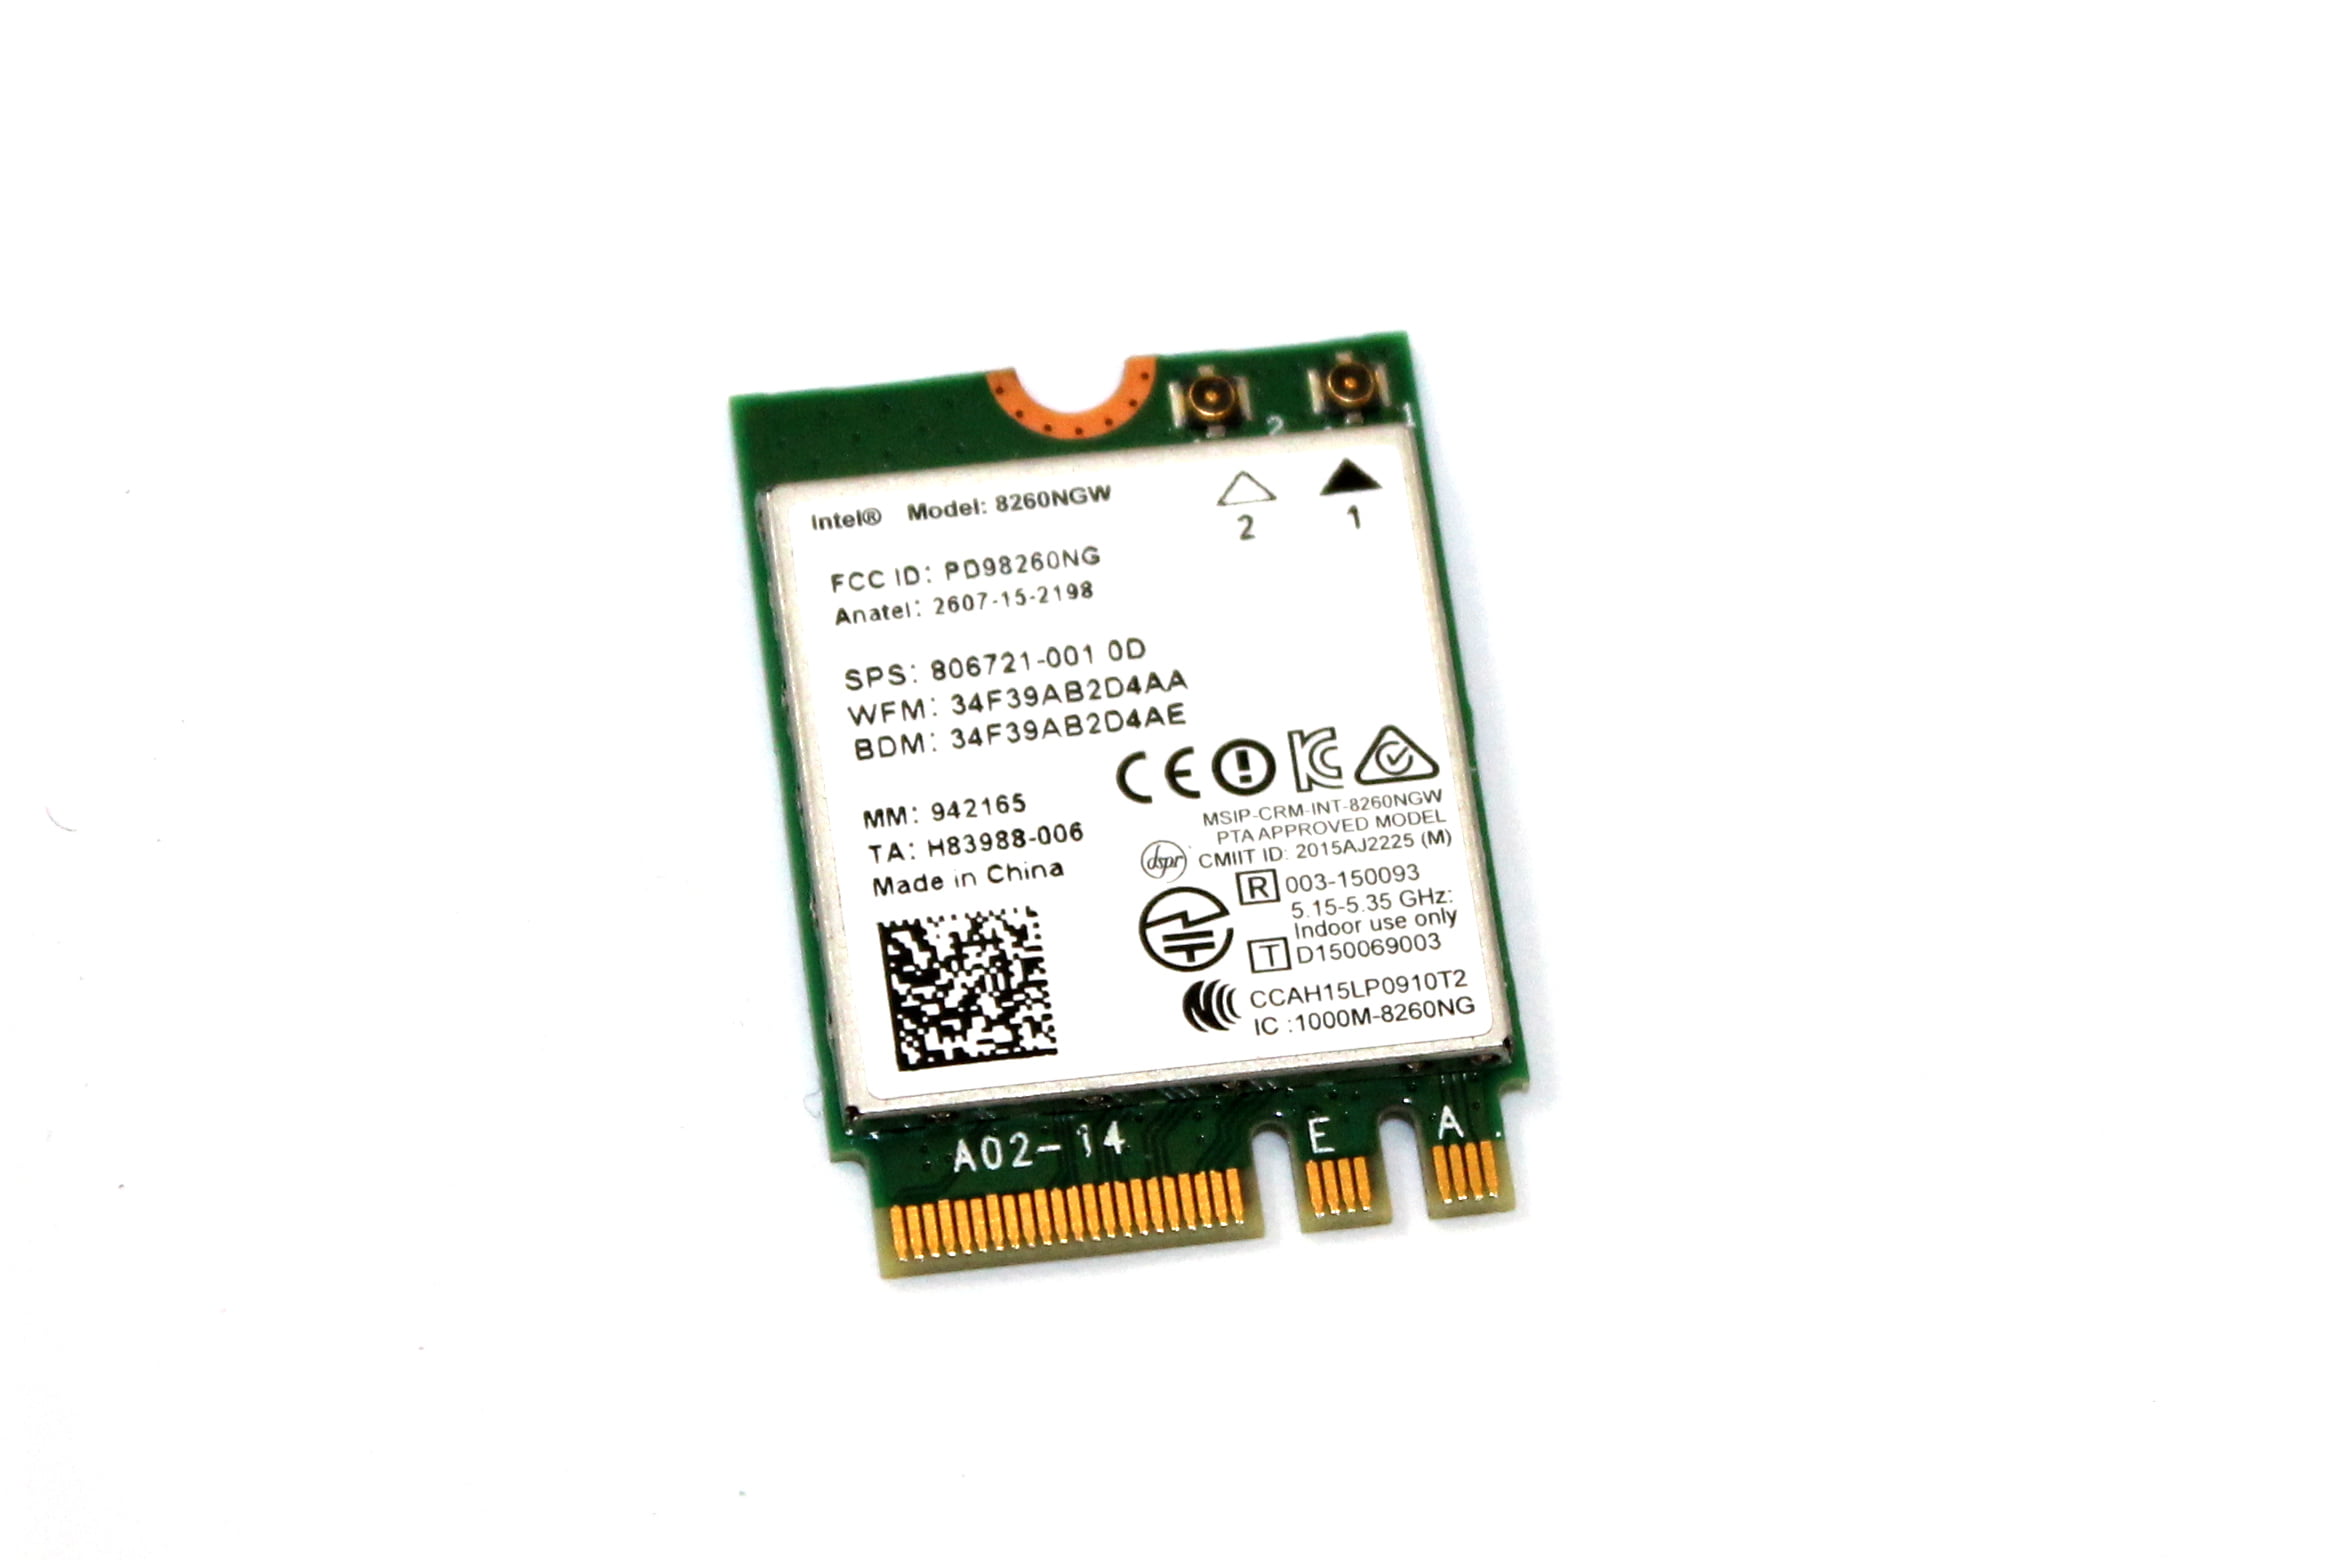 Intel 3168NGW 802.11AC NGFF/M.2 Wireless Wifi+Bluetooth BT 4.2 Mini WLAN Card